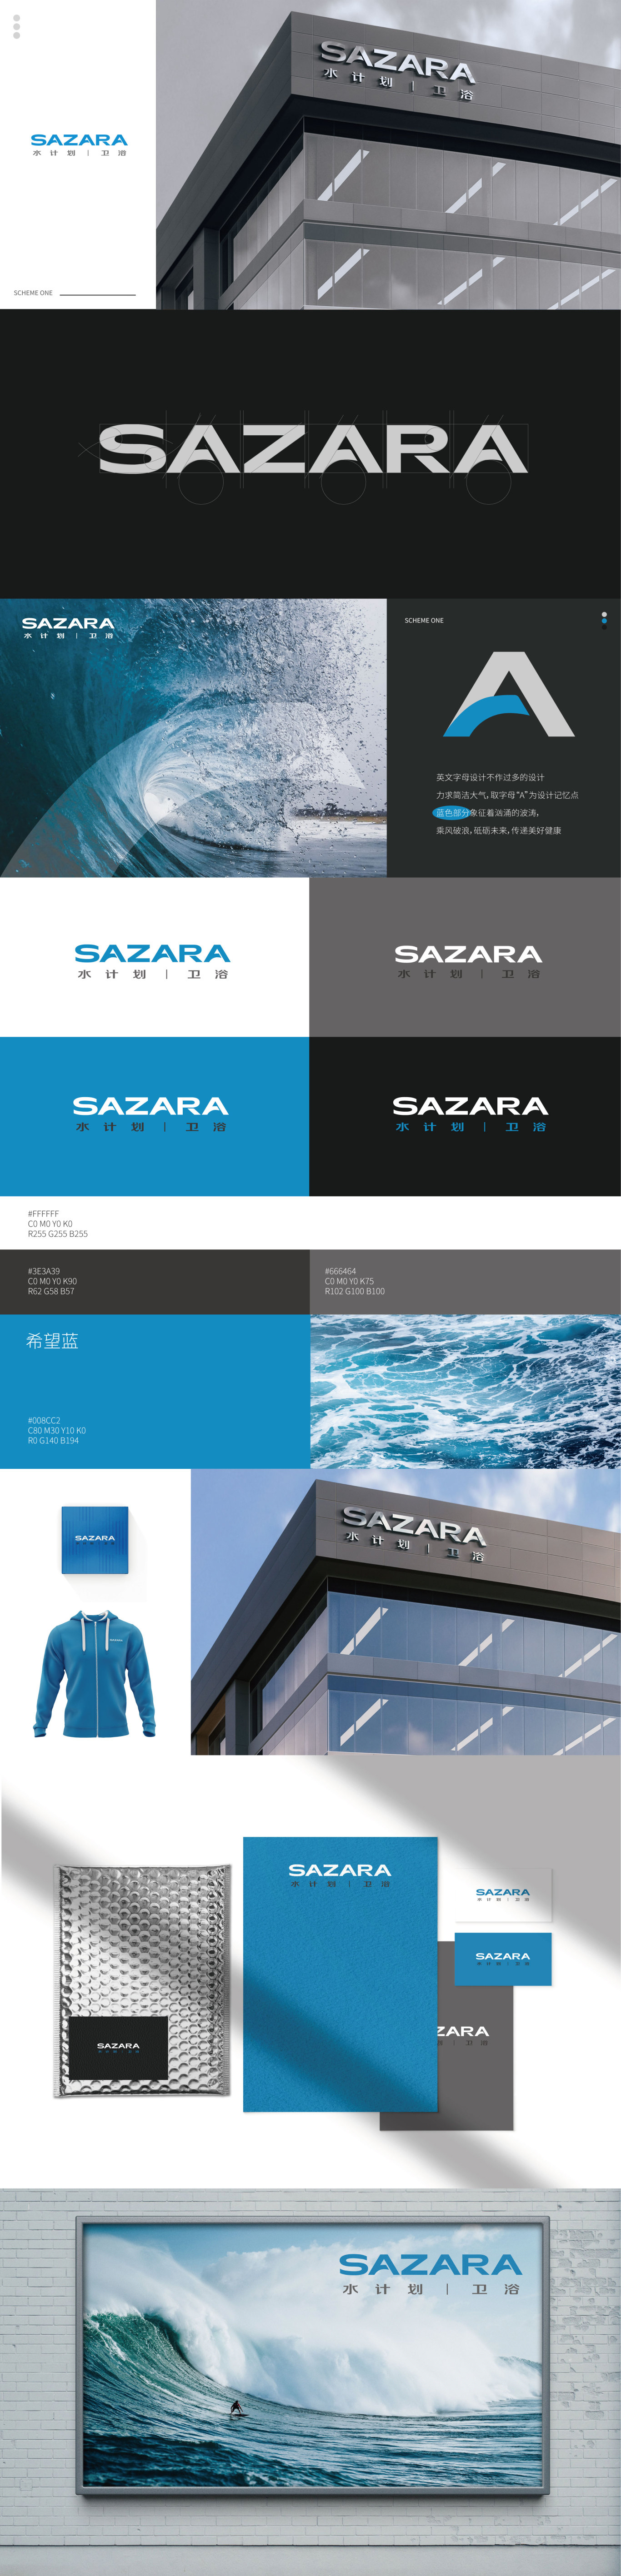 SAZARA水计划/卫浴厨卫产品标志设计图0